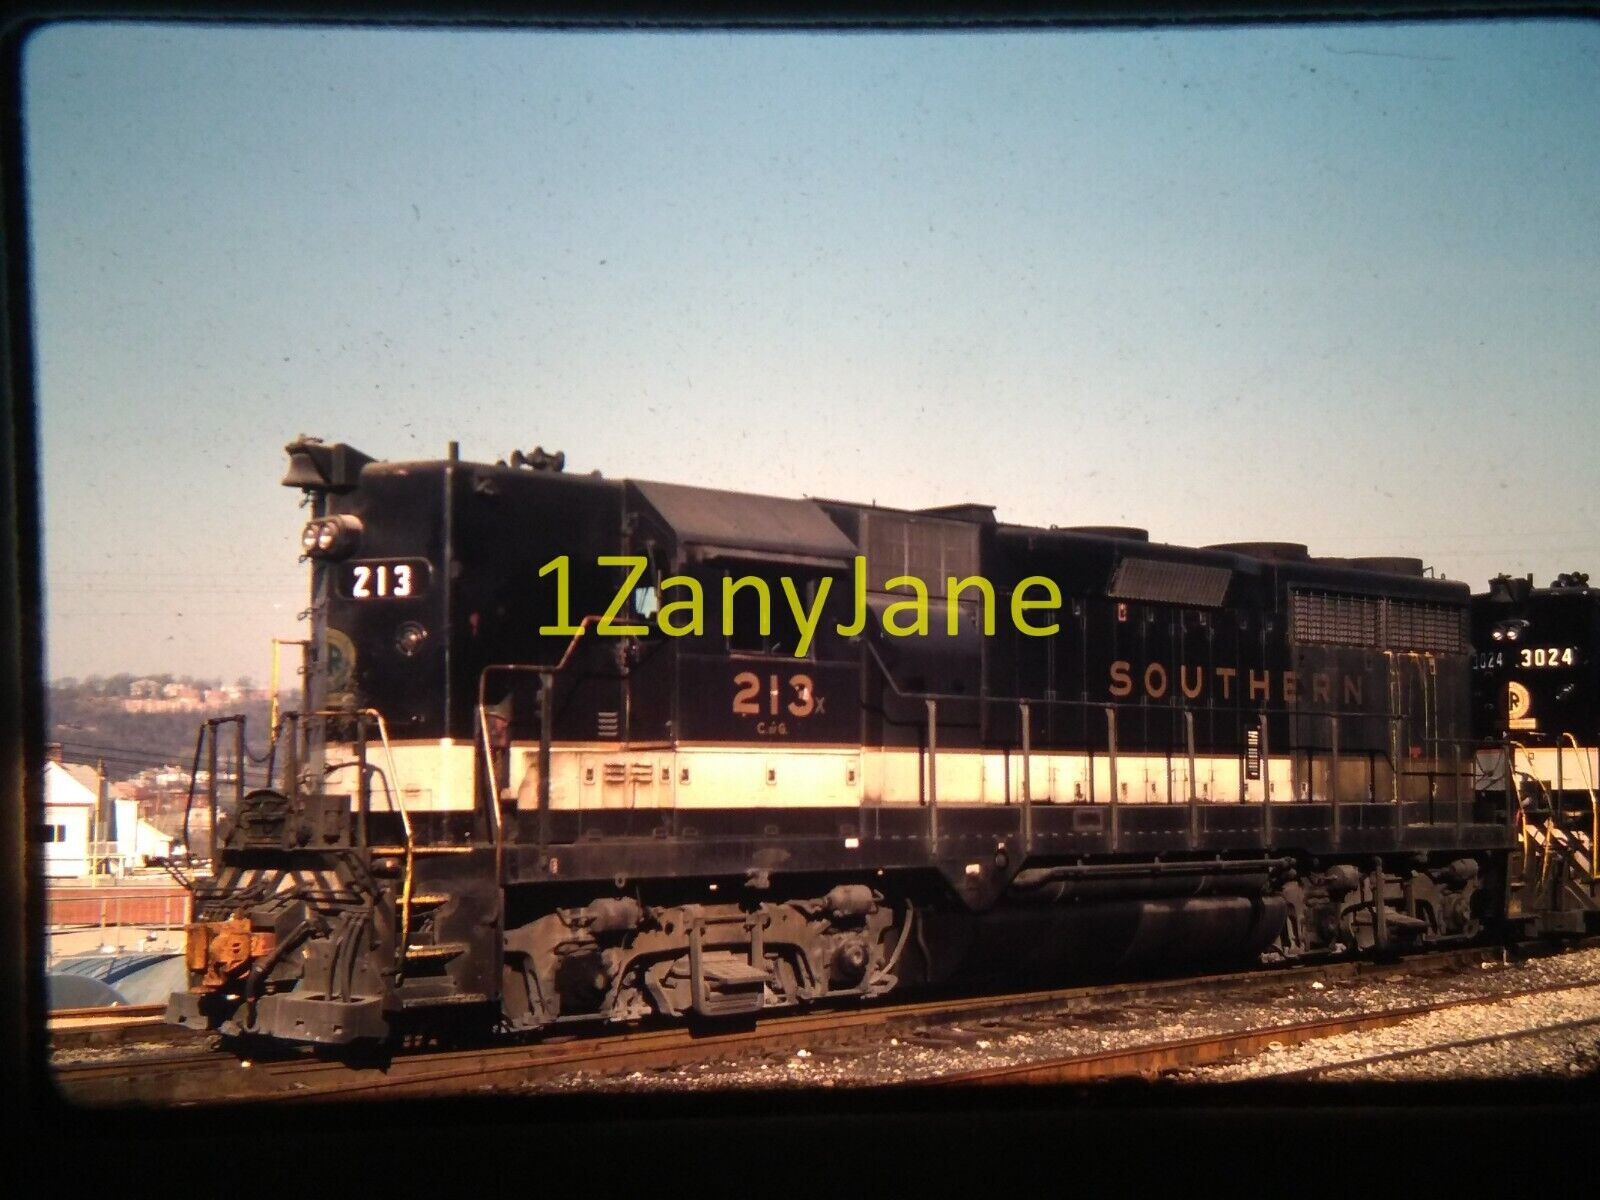 HM17 35MM TRAIN SLIDE Photo Engine Locomotive SOU 213, LUDLOW,KY 1980